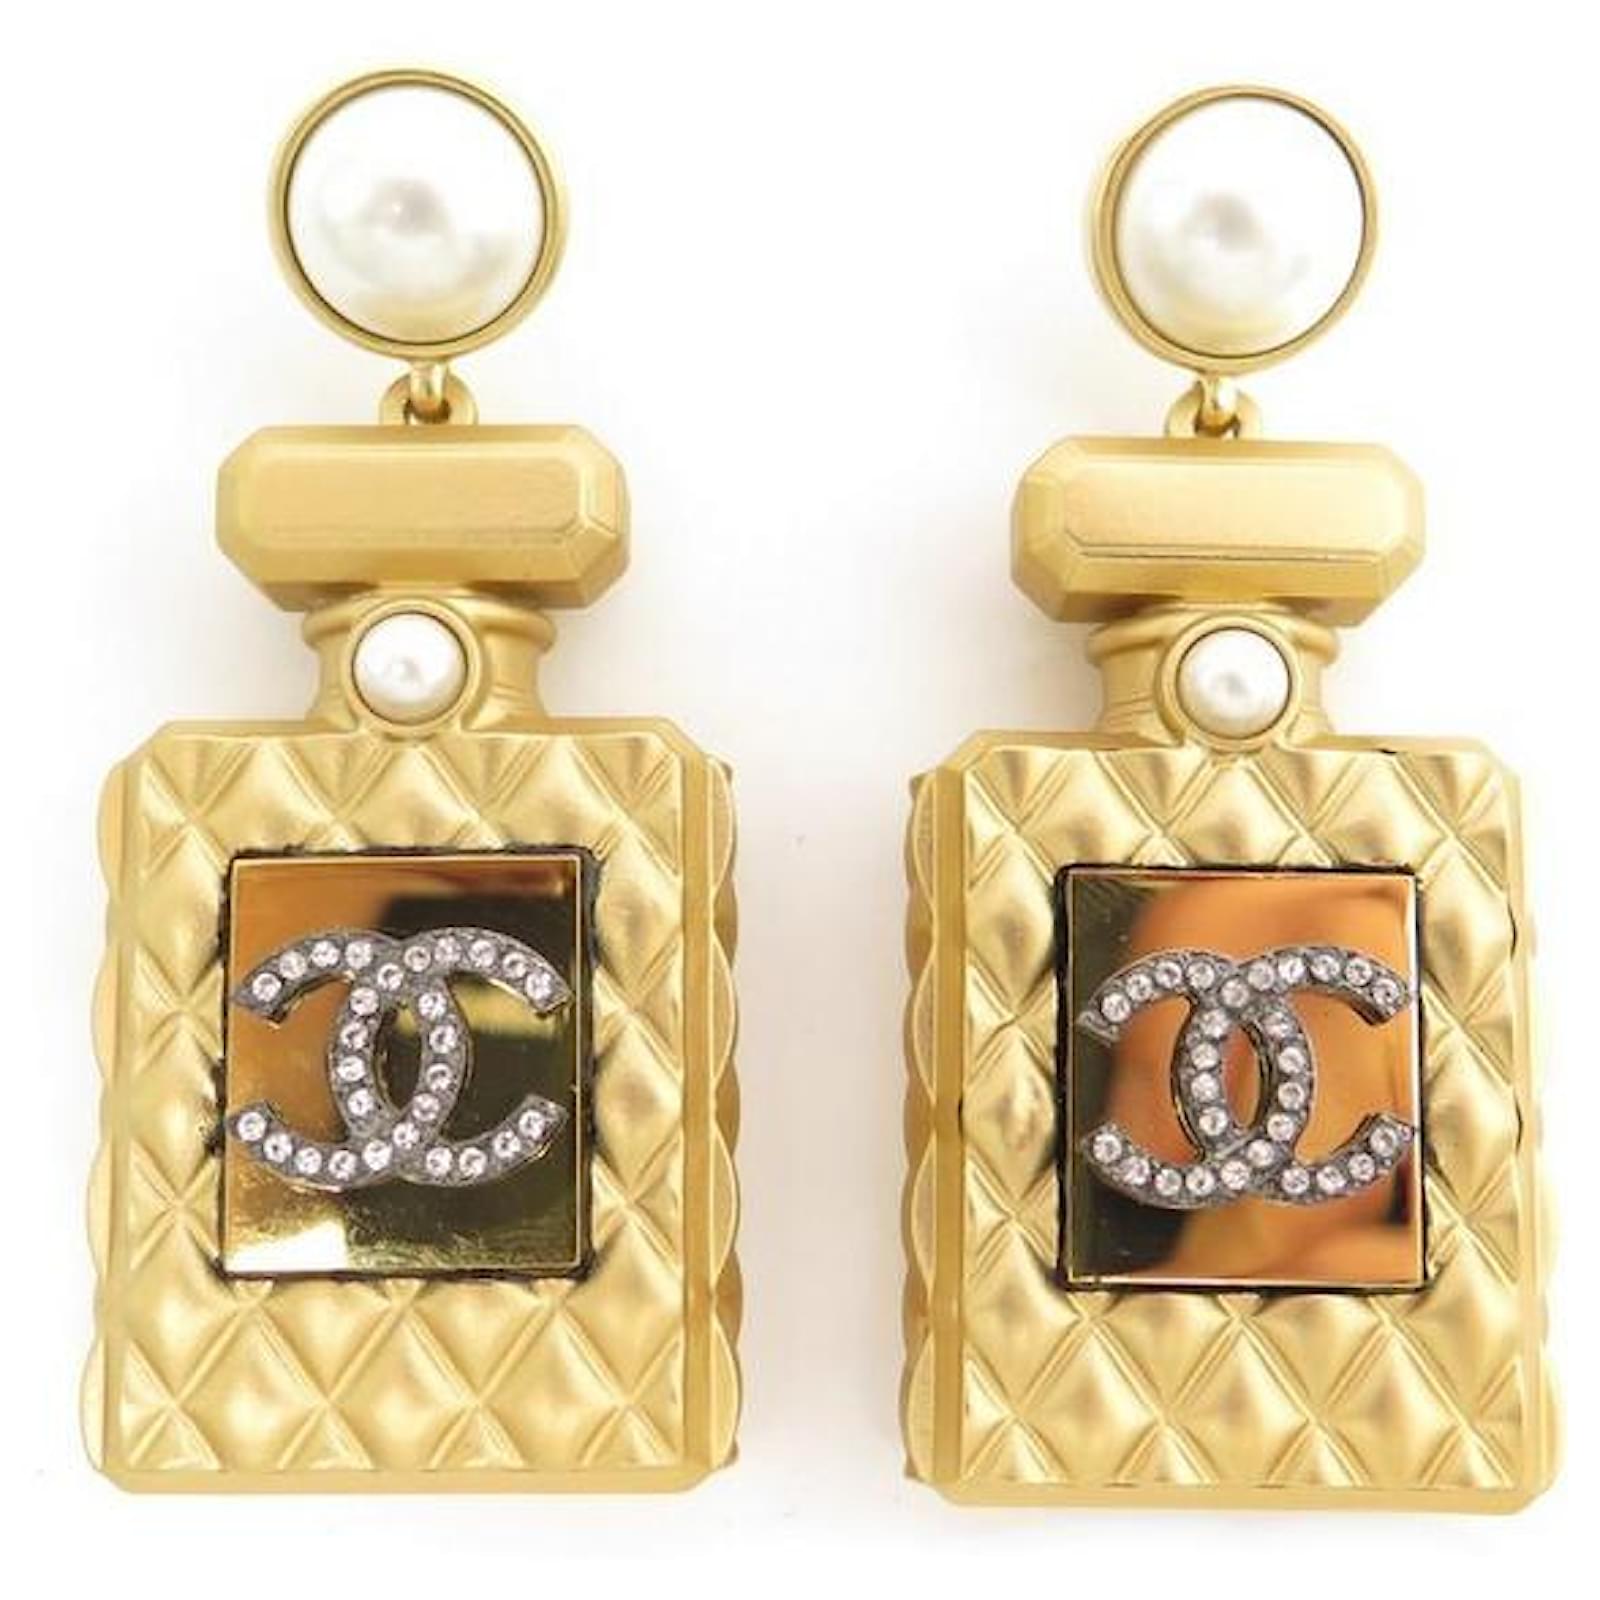 Vintage Chanel earrings perfume bottle logo